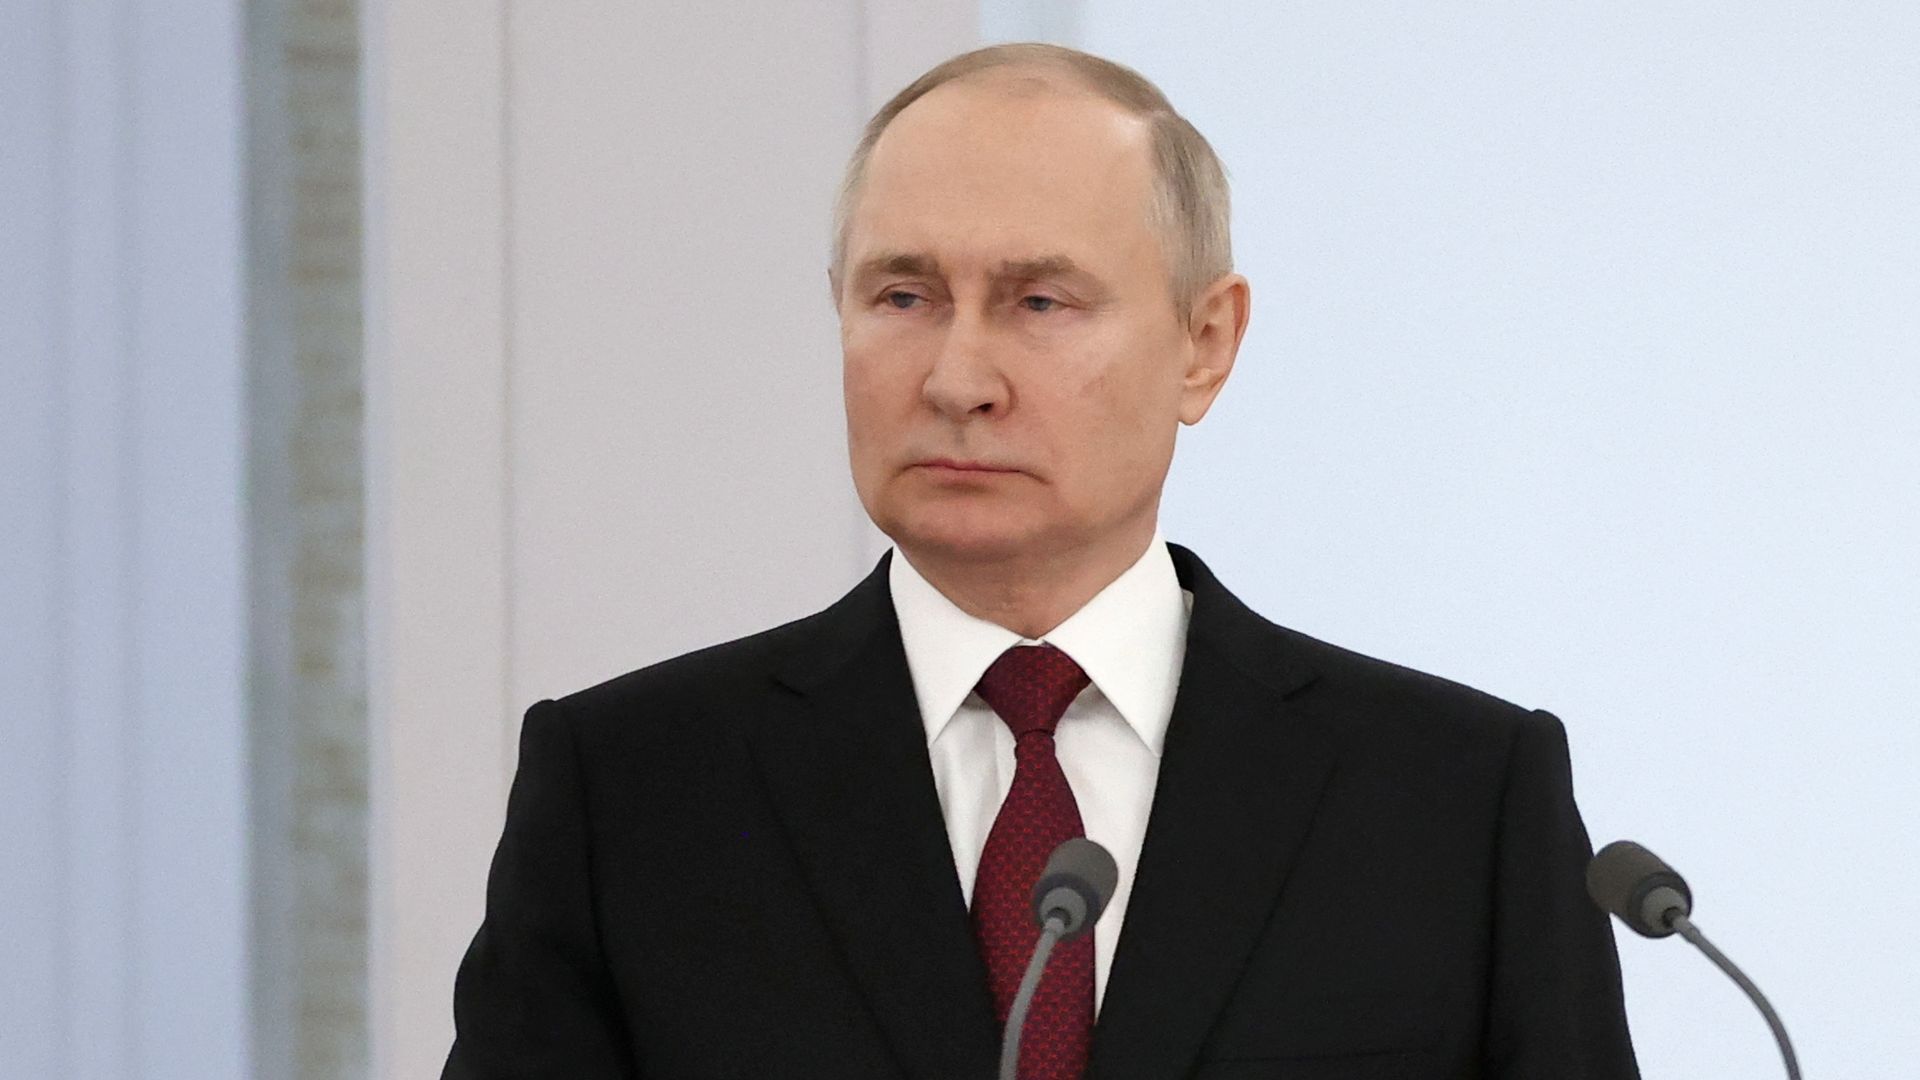 Russian President Vladimir Putin attends a ceremony.